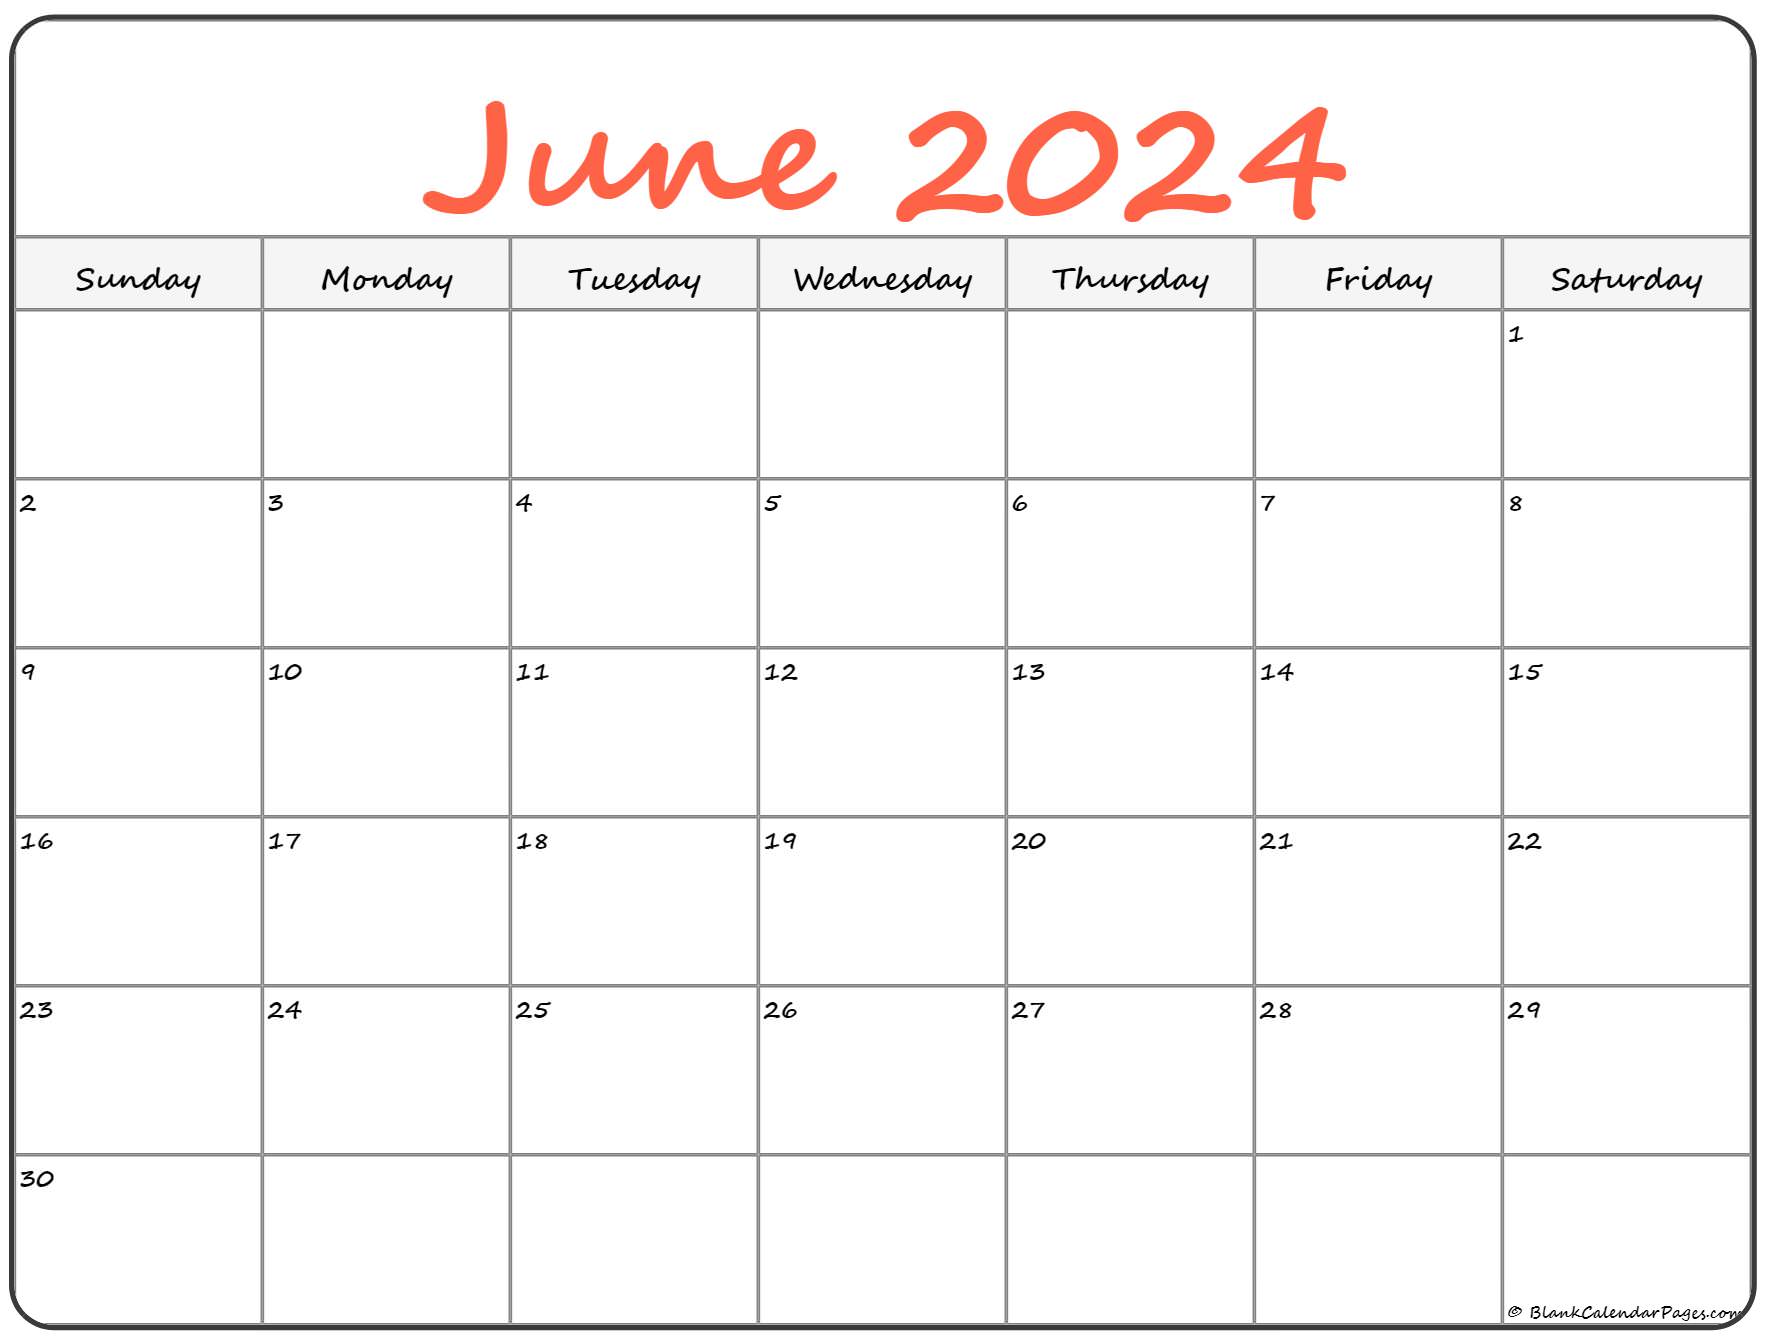 Printable Monthly Calendar June 2023 Printable Calendar 2023